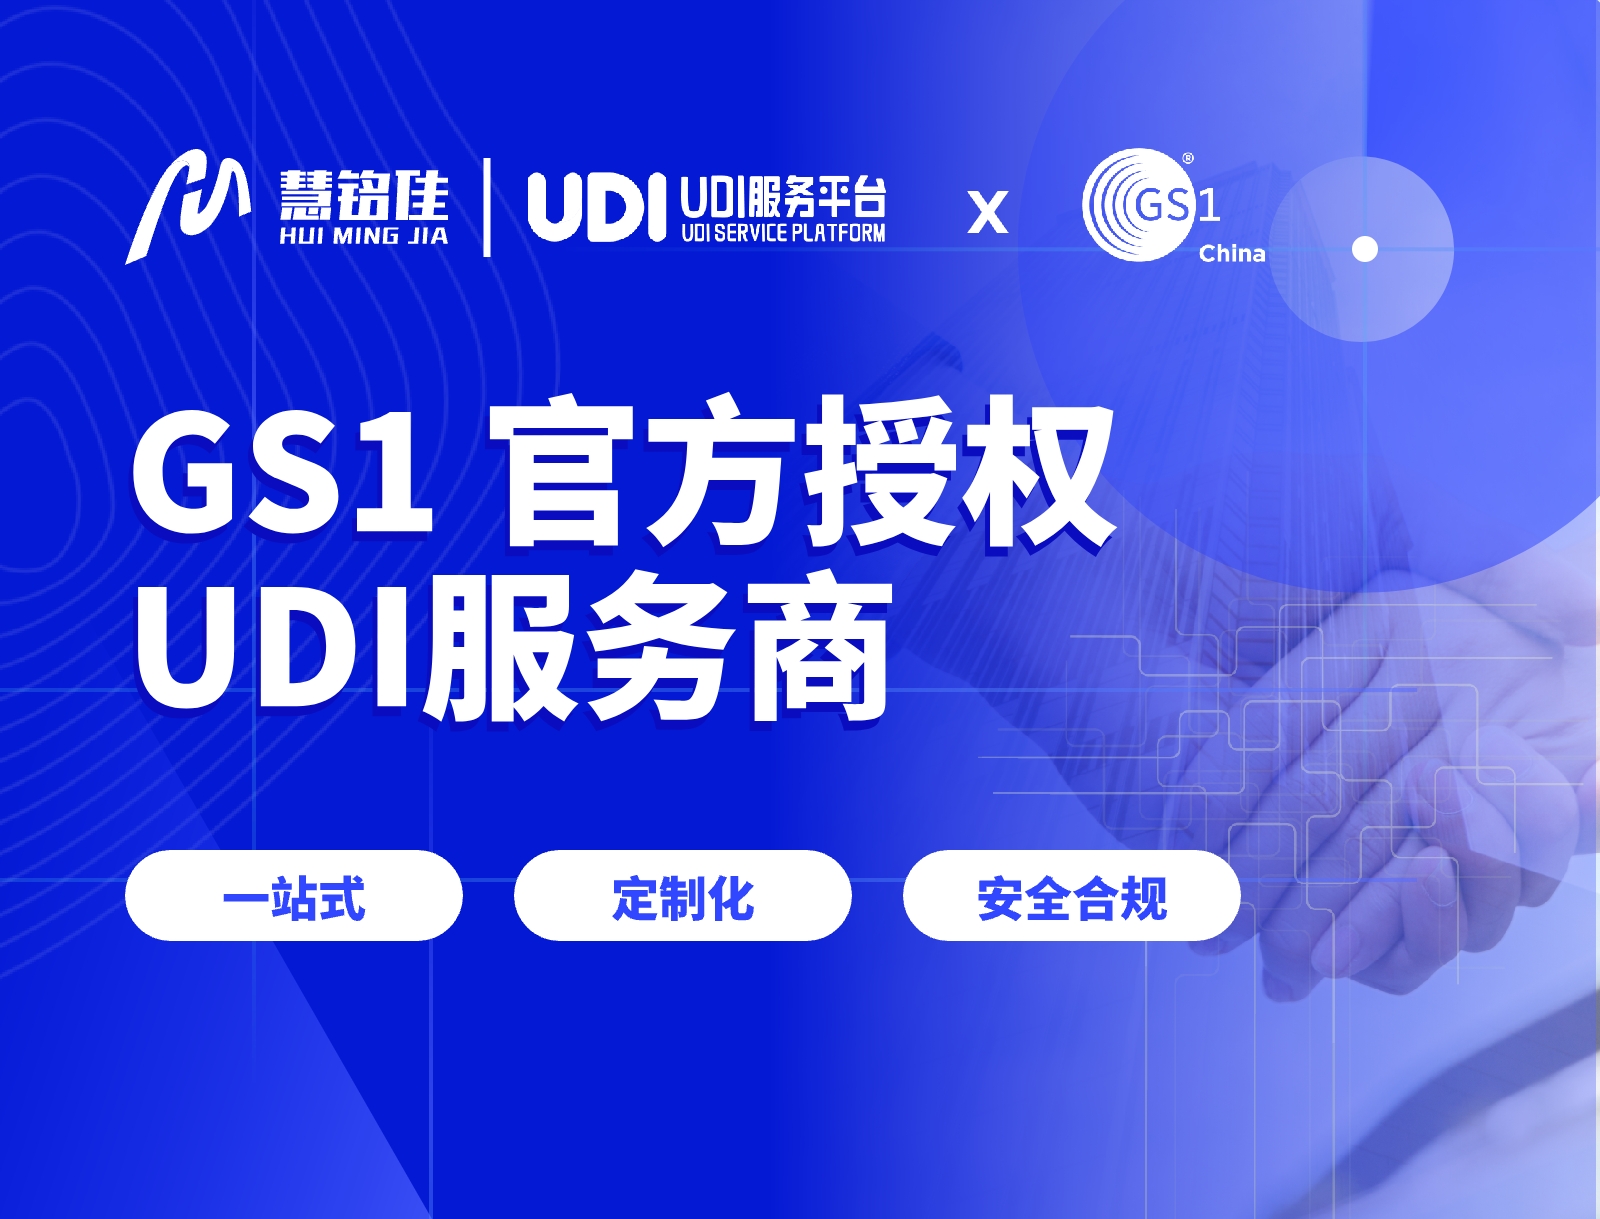 GS1官方推荐服务商——认准慧铭佳科技【UDI服务平台】